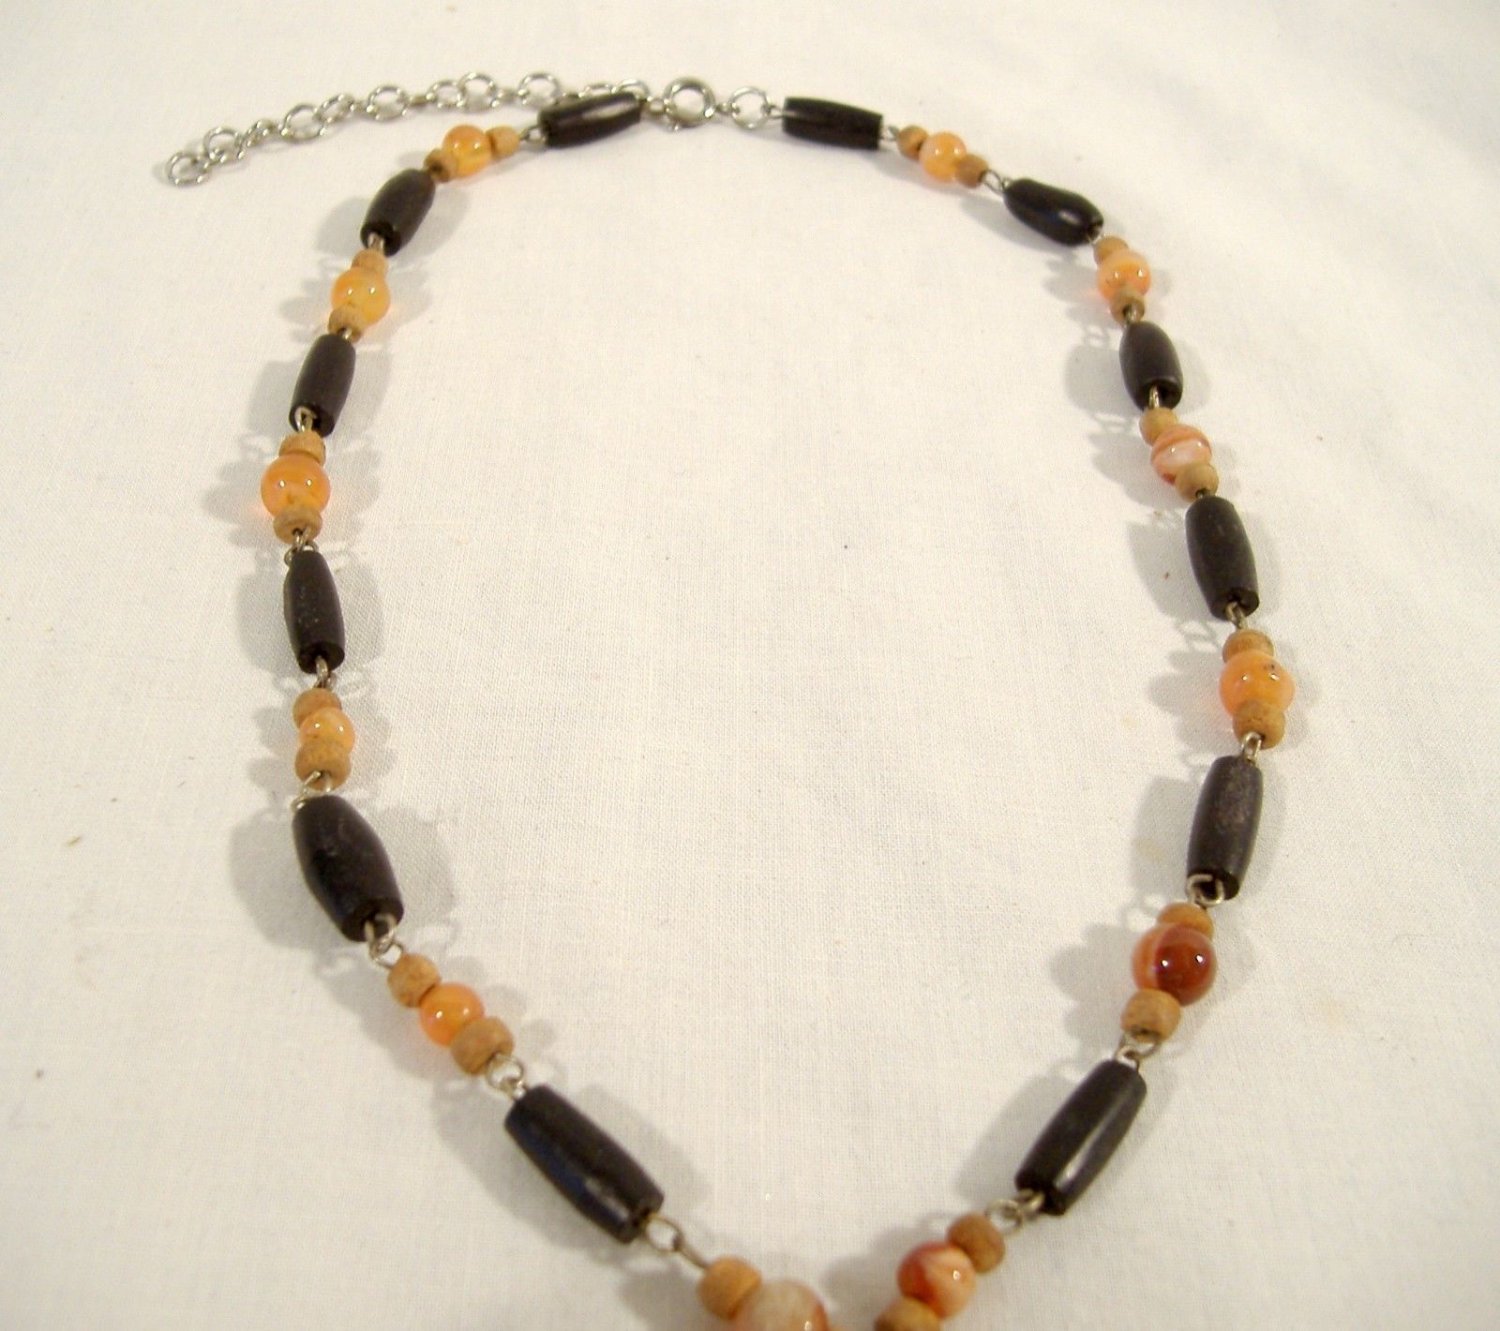 Carnelian Buffalo Horn Beads Pendant Necklace Vintage Ethnic Tribal